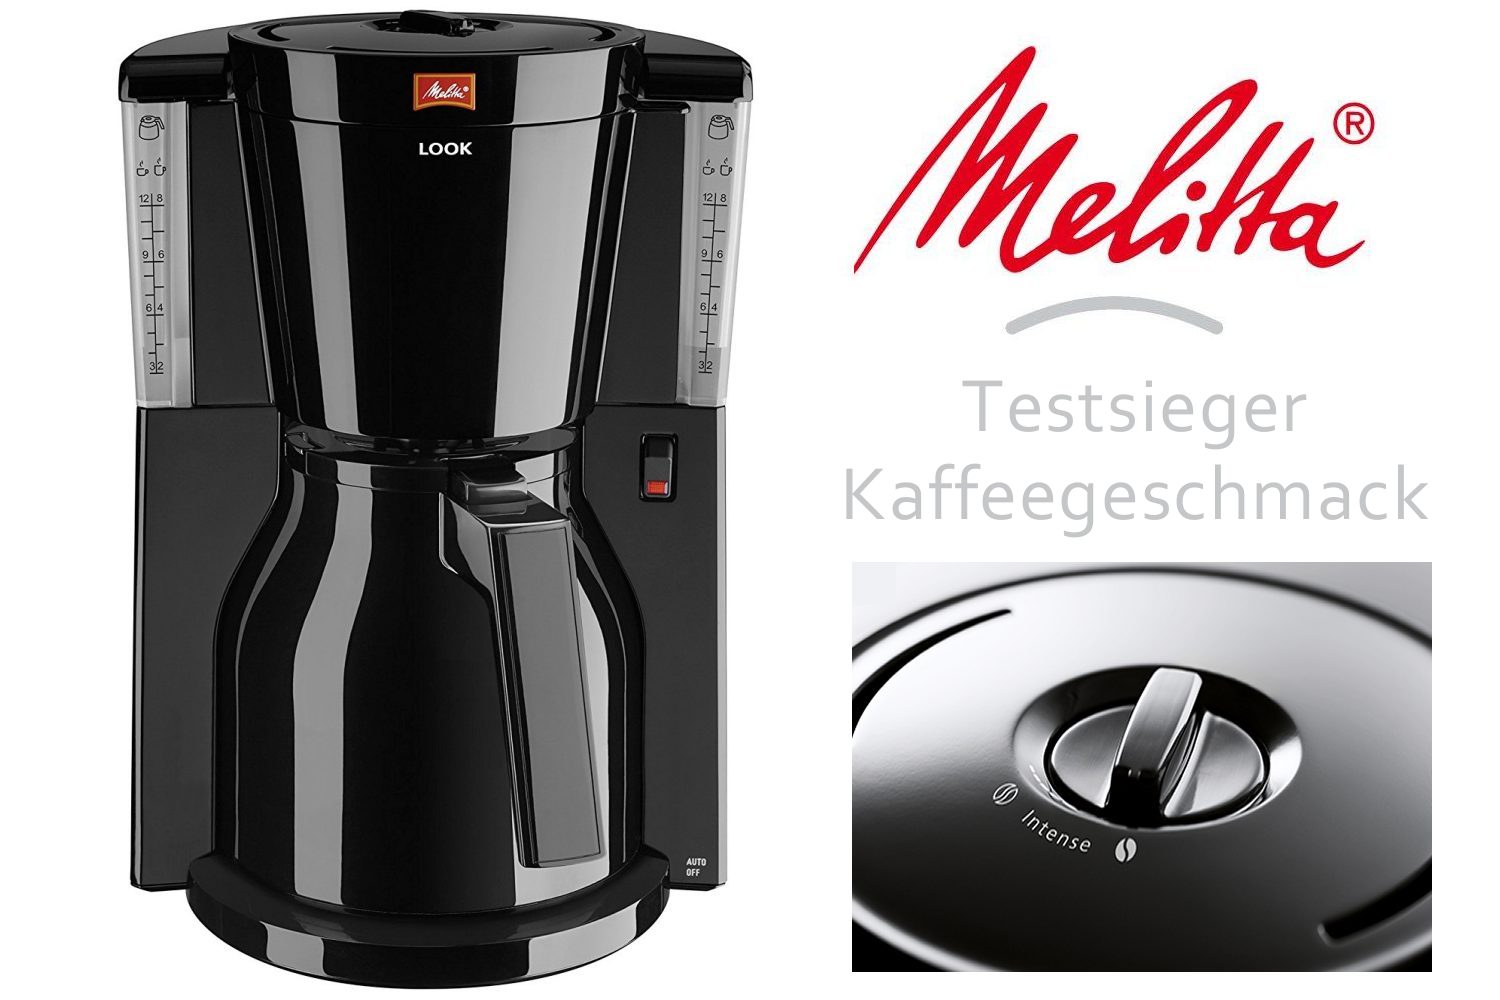 Filterkaffeemaschine Melitta Look Therm  - Testsieger Stiftung Warentest 08/2018